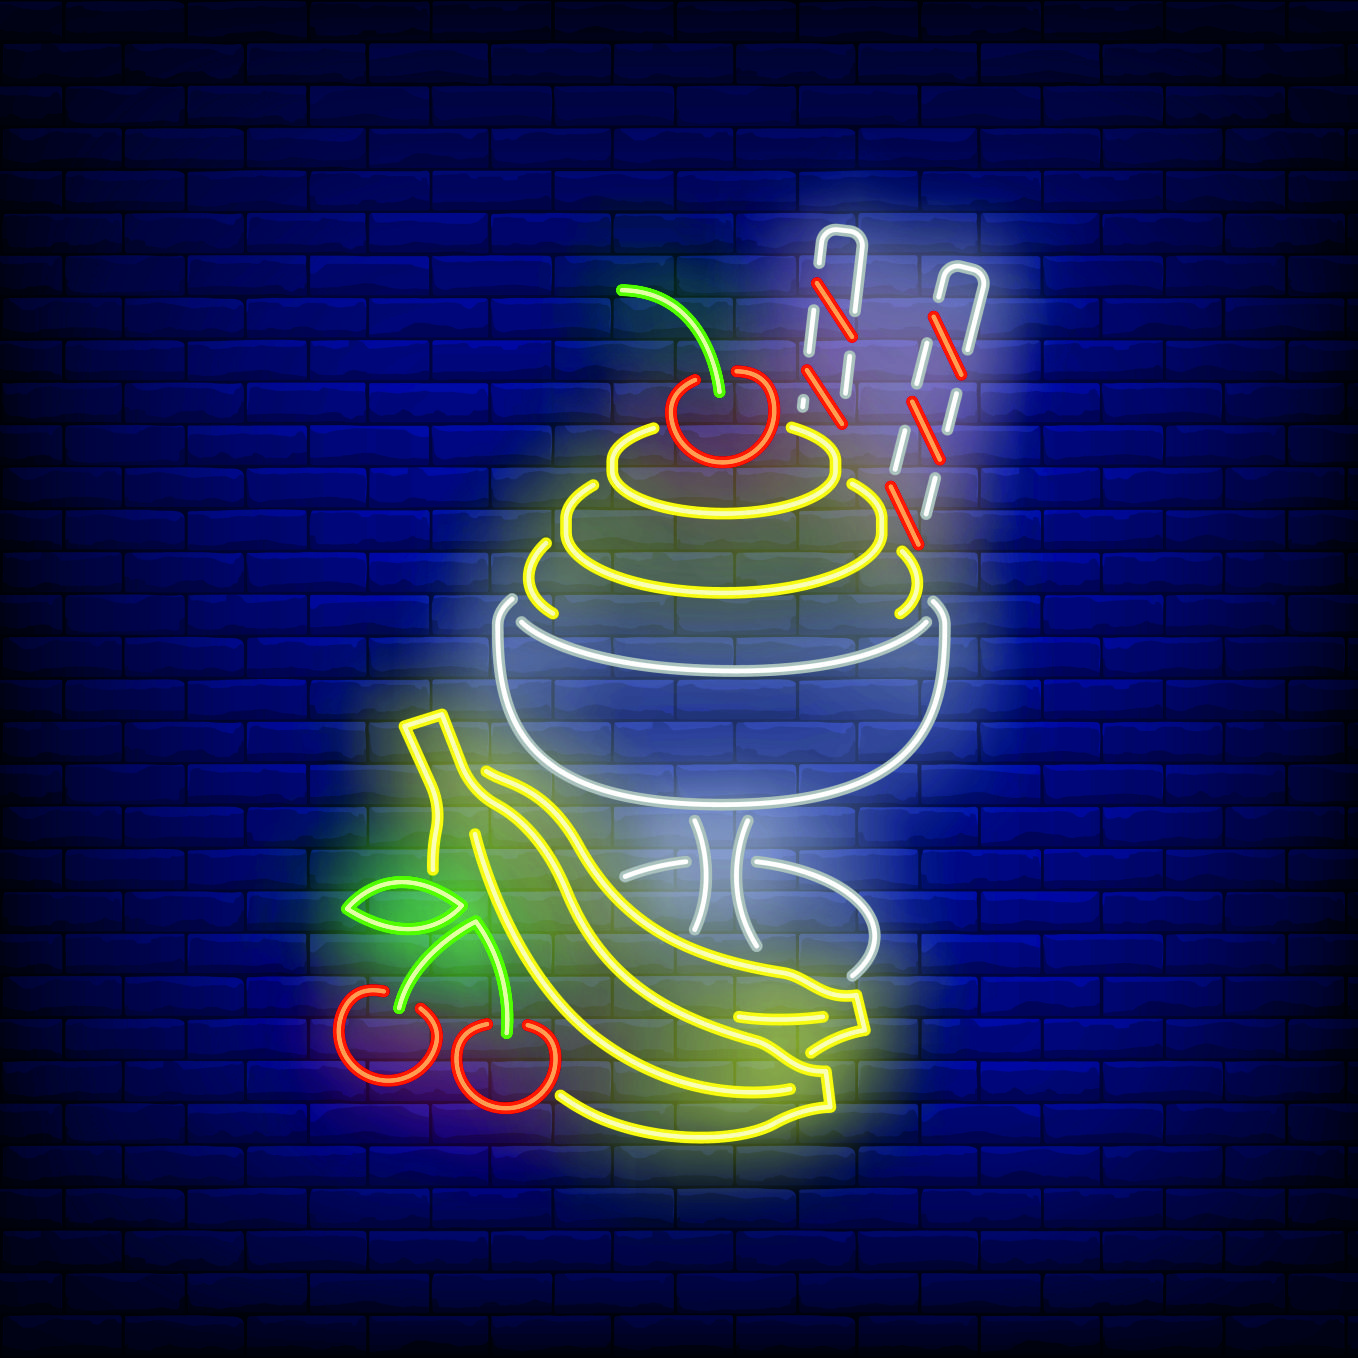 Ice cream sundae neon sign